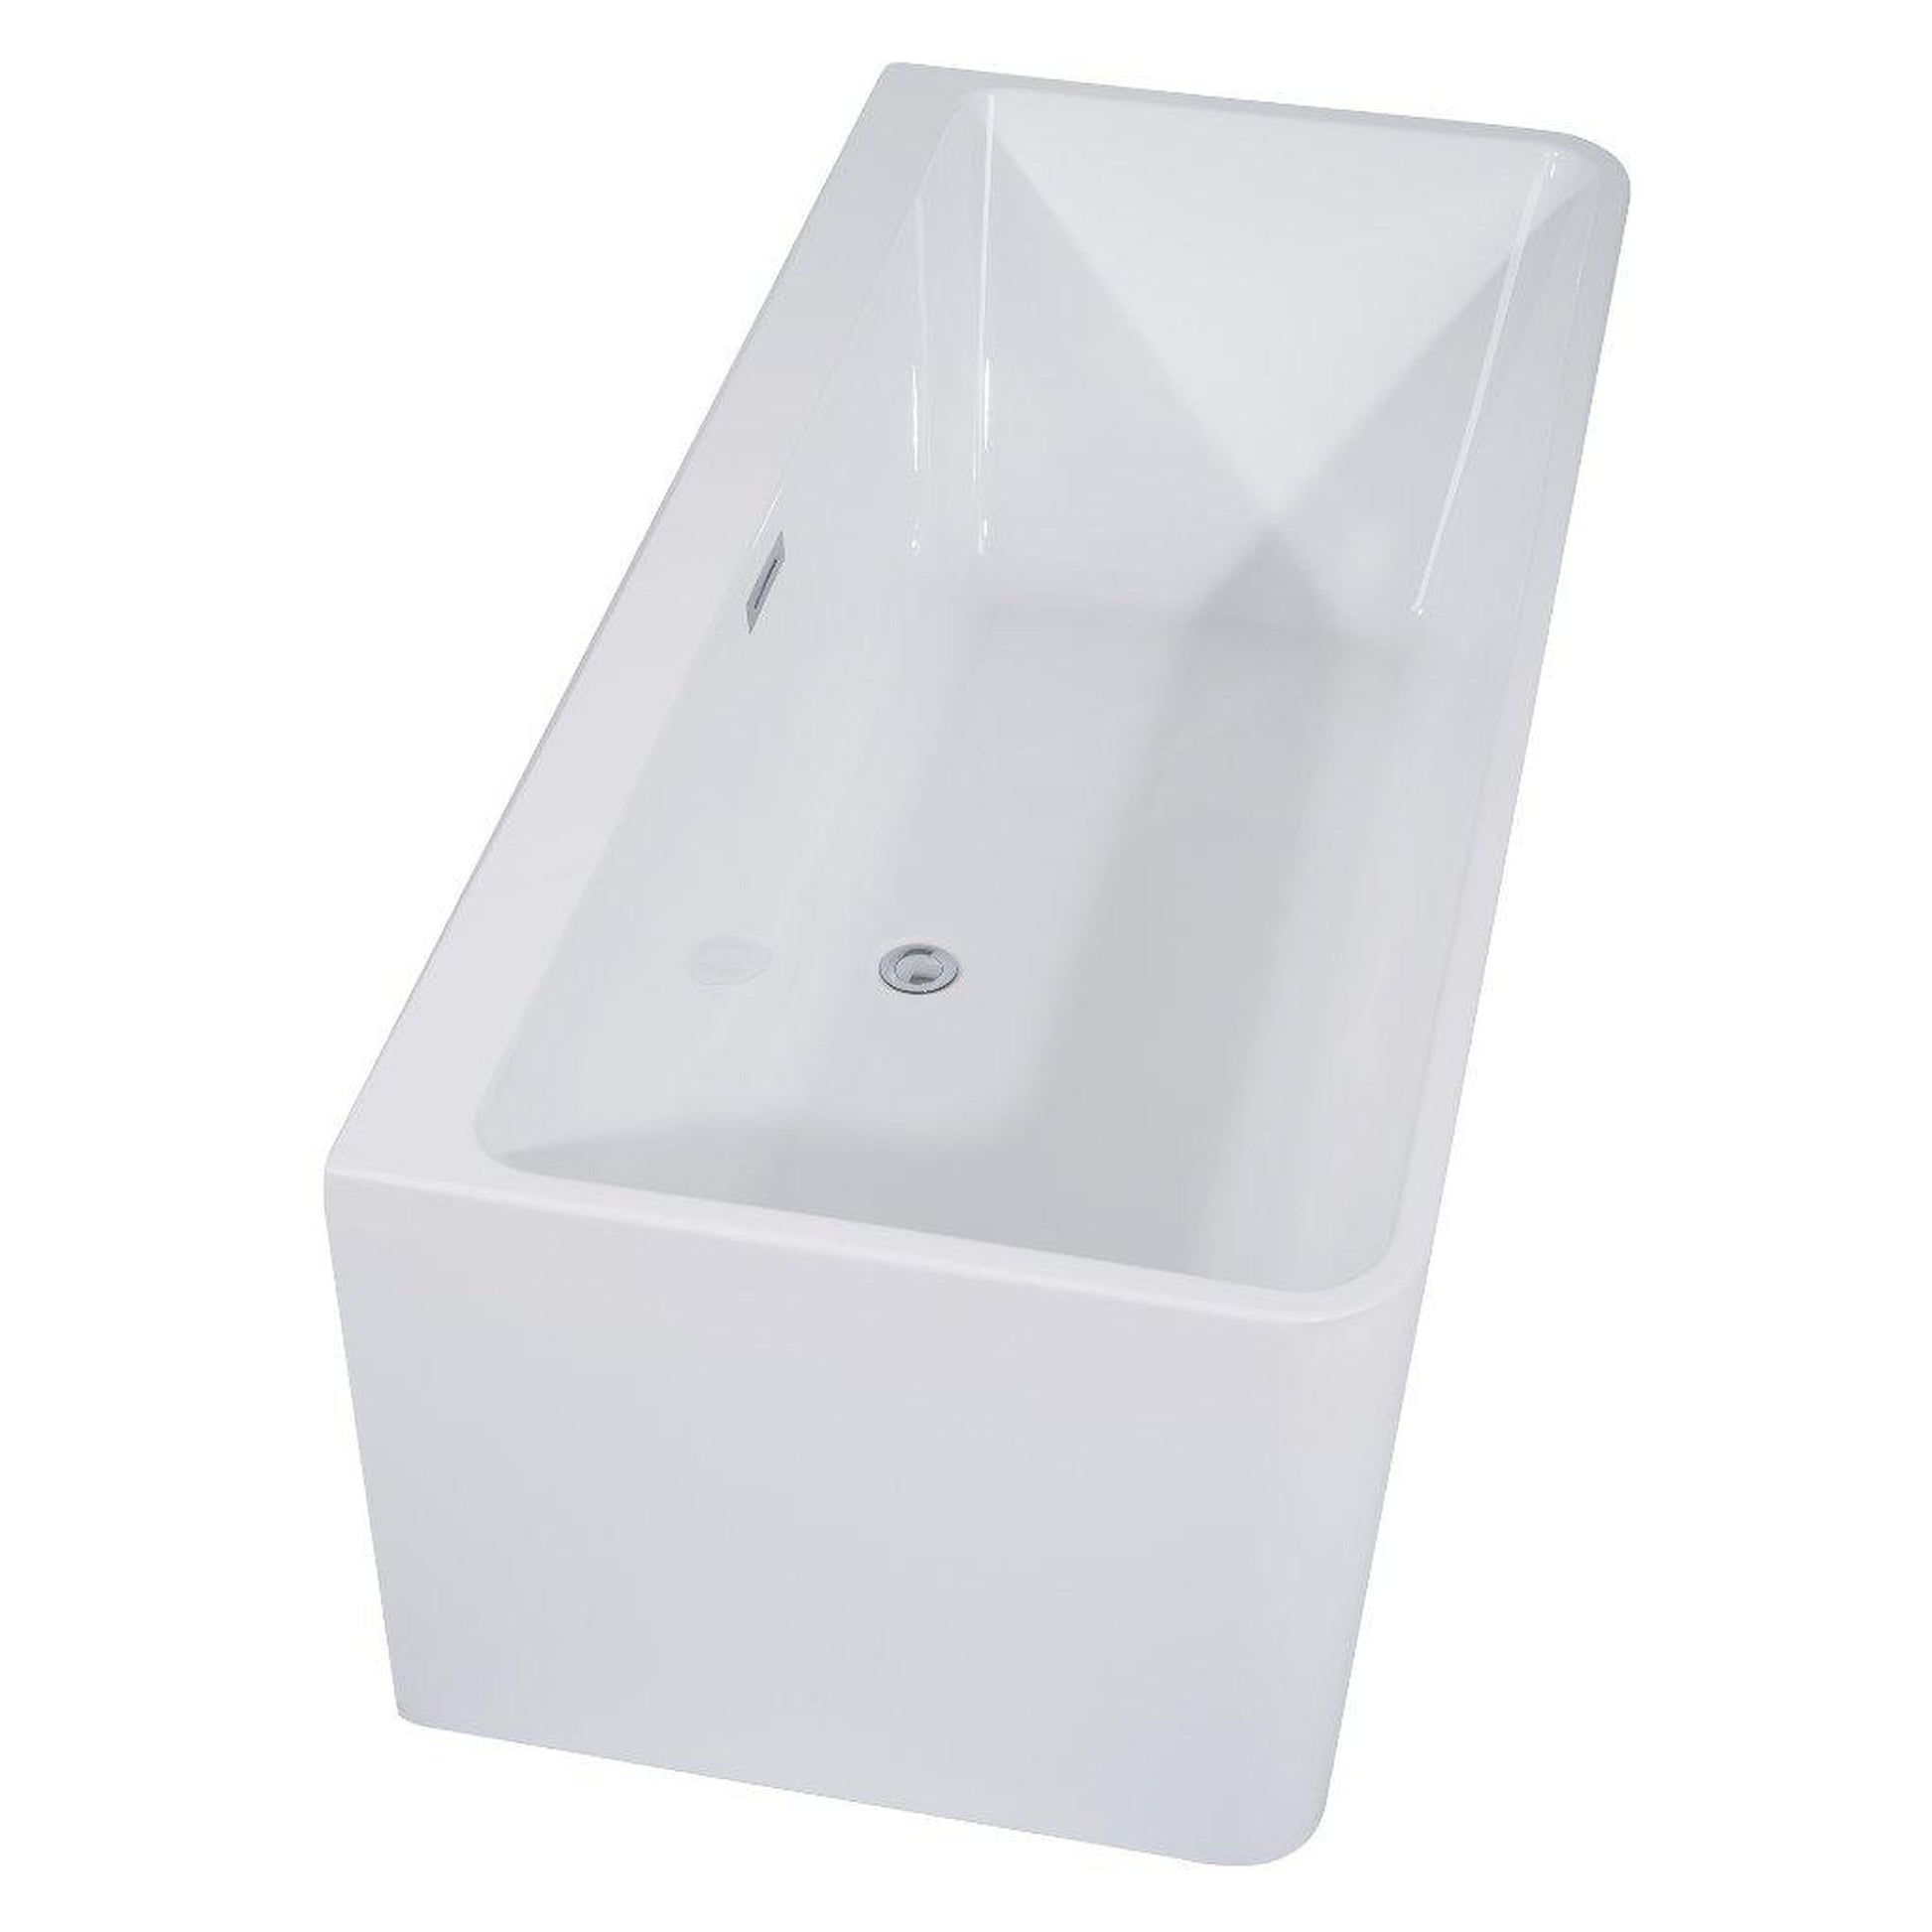 ALFI Brand AB8858 59" One Person Freestanding White Rectangle Acrylic Soaking Bathtub